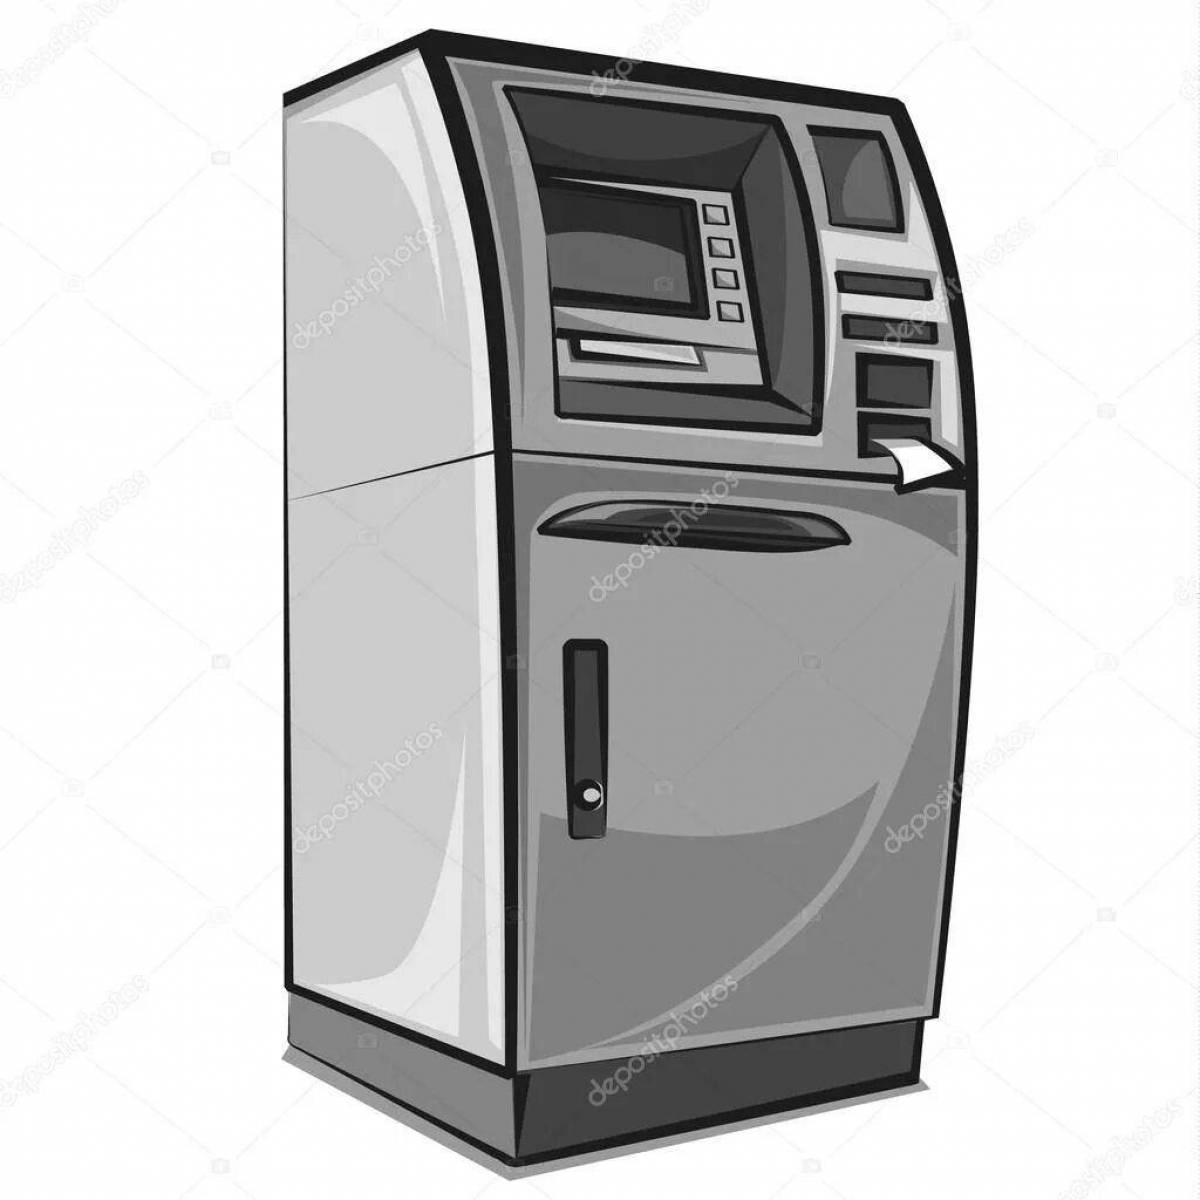 Joyful ATM coloring page